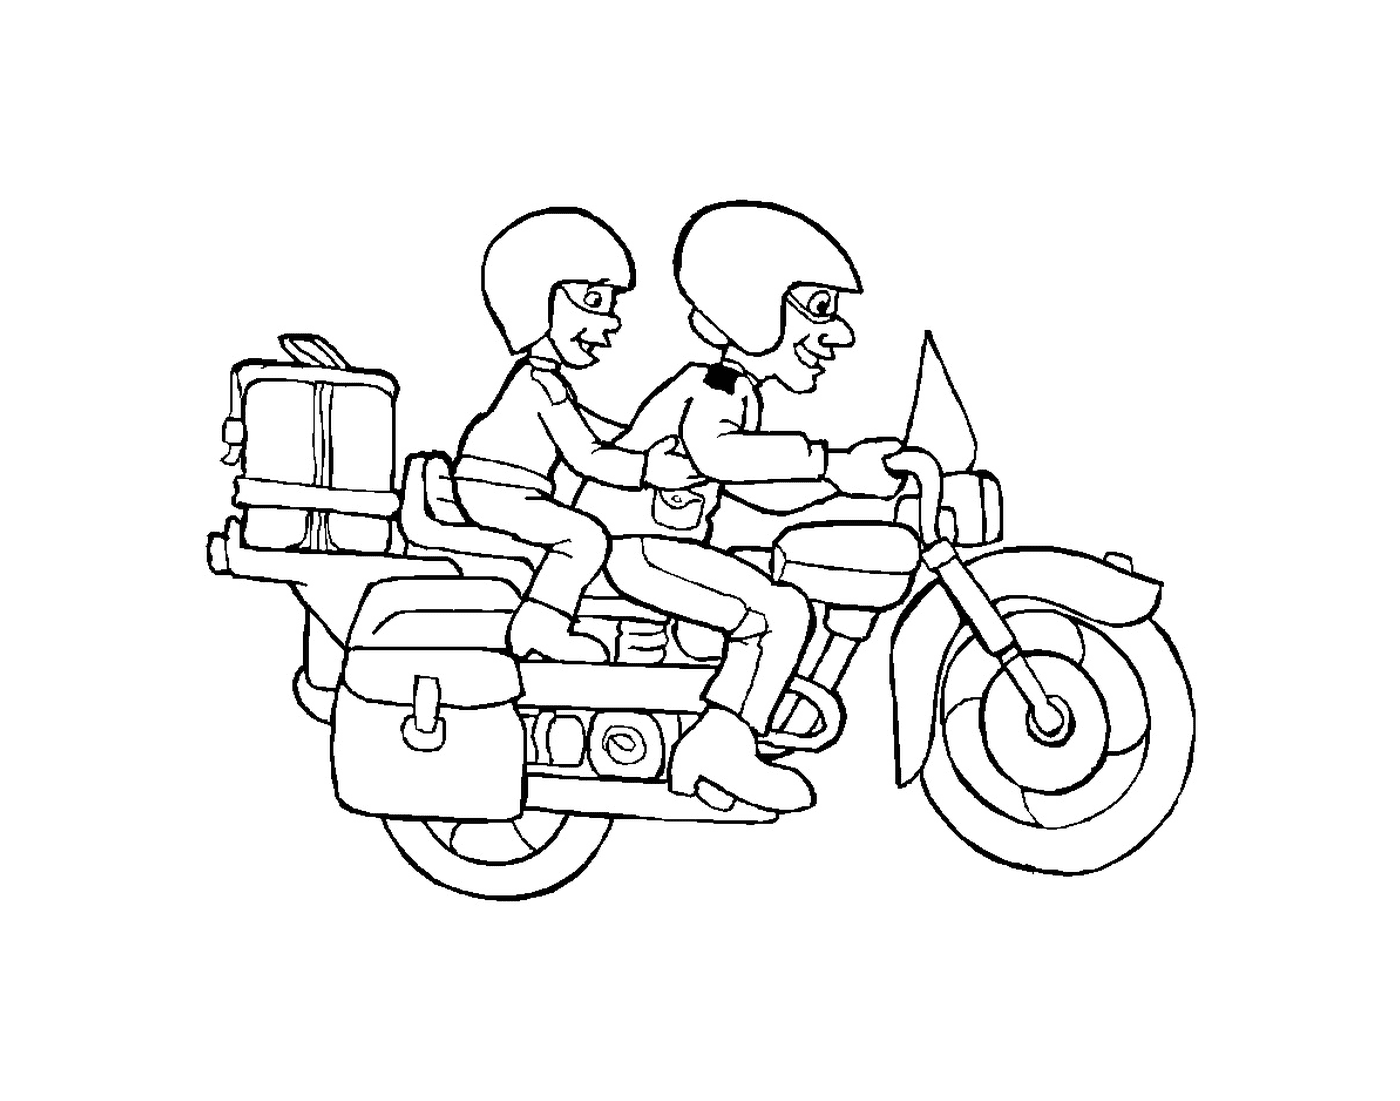  Два человека на мотоцикле 